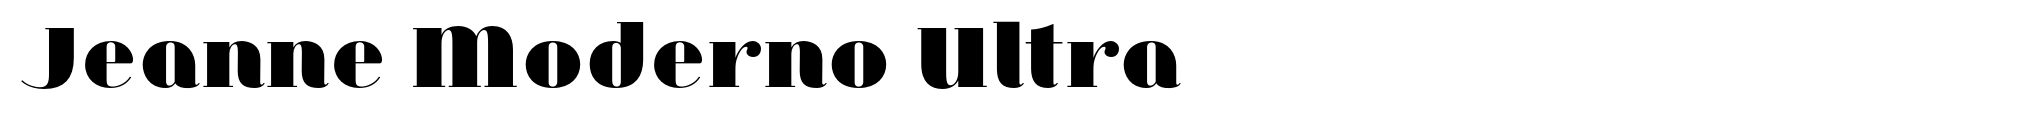 Jeanne Moderno Ultra image